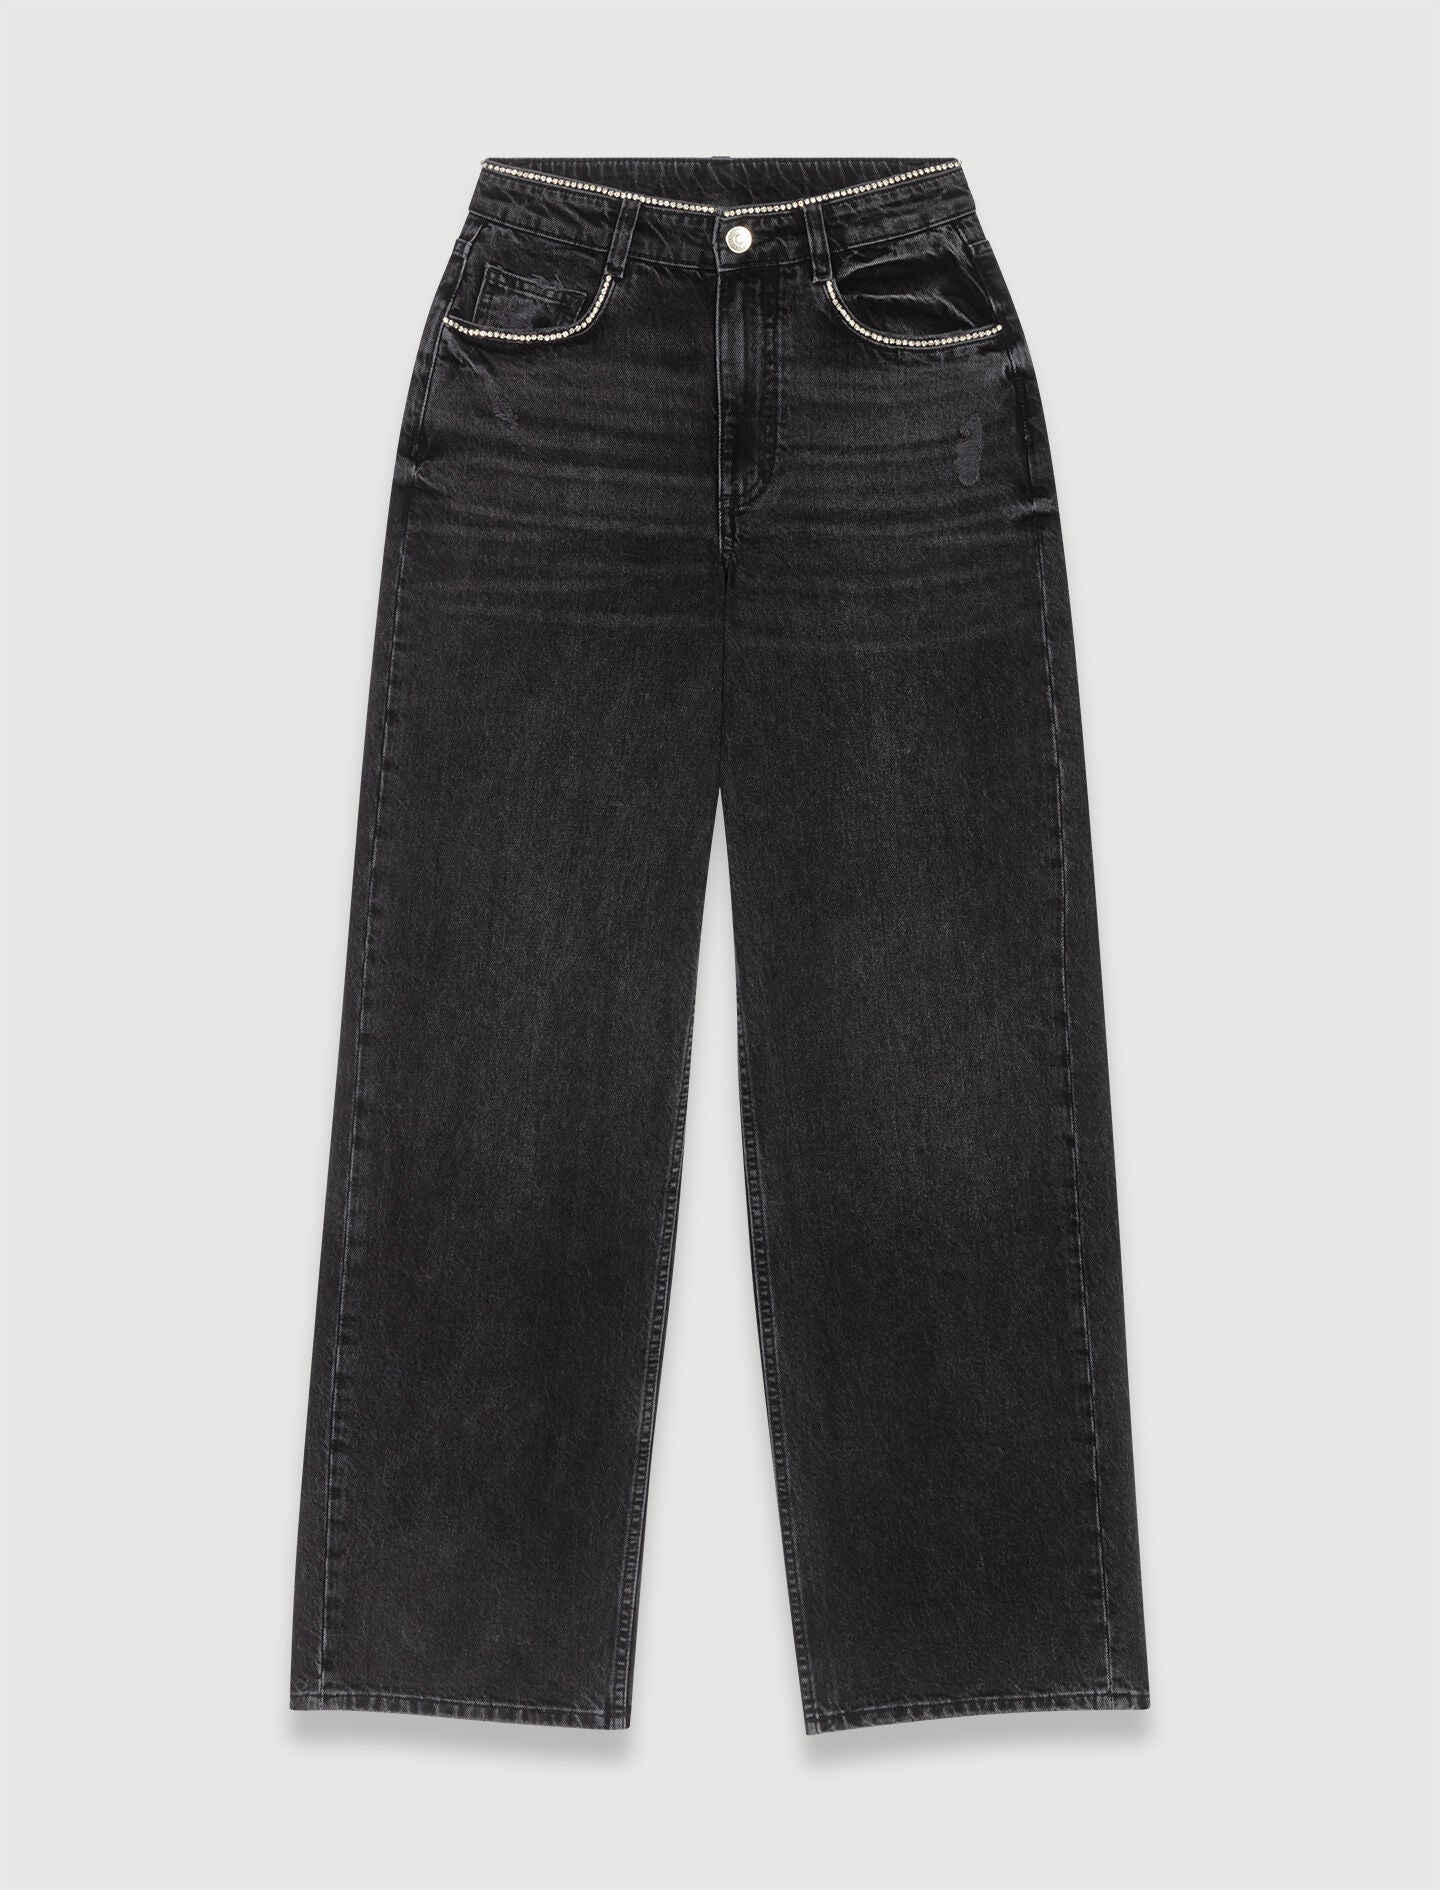 Black-wide-leg jeans with rhinestones